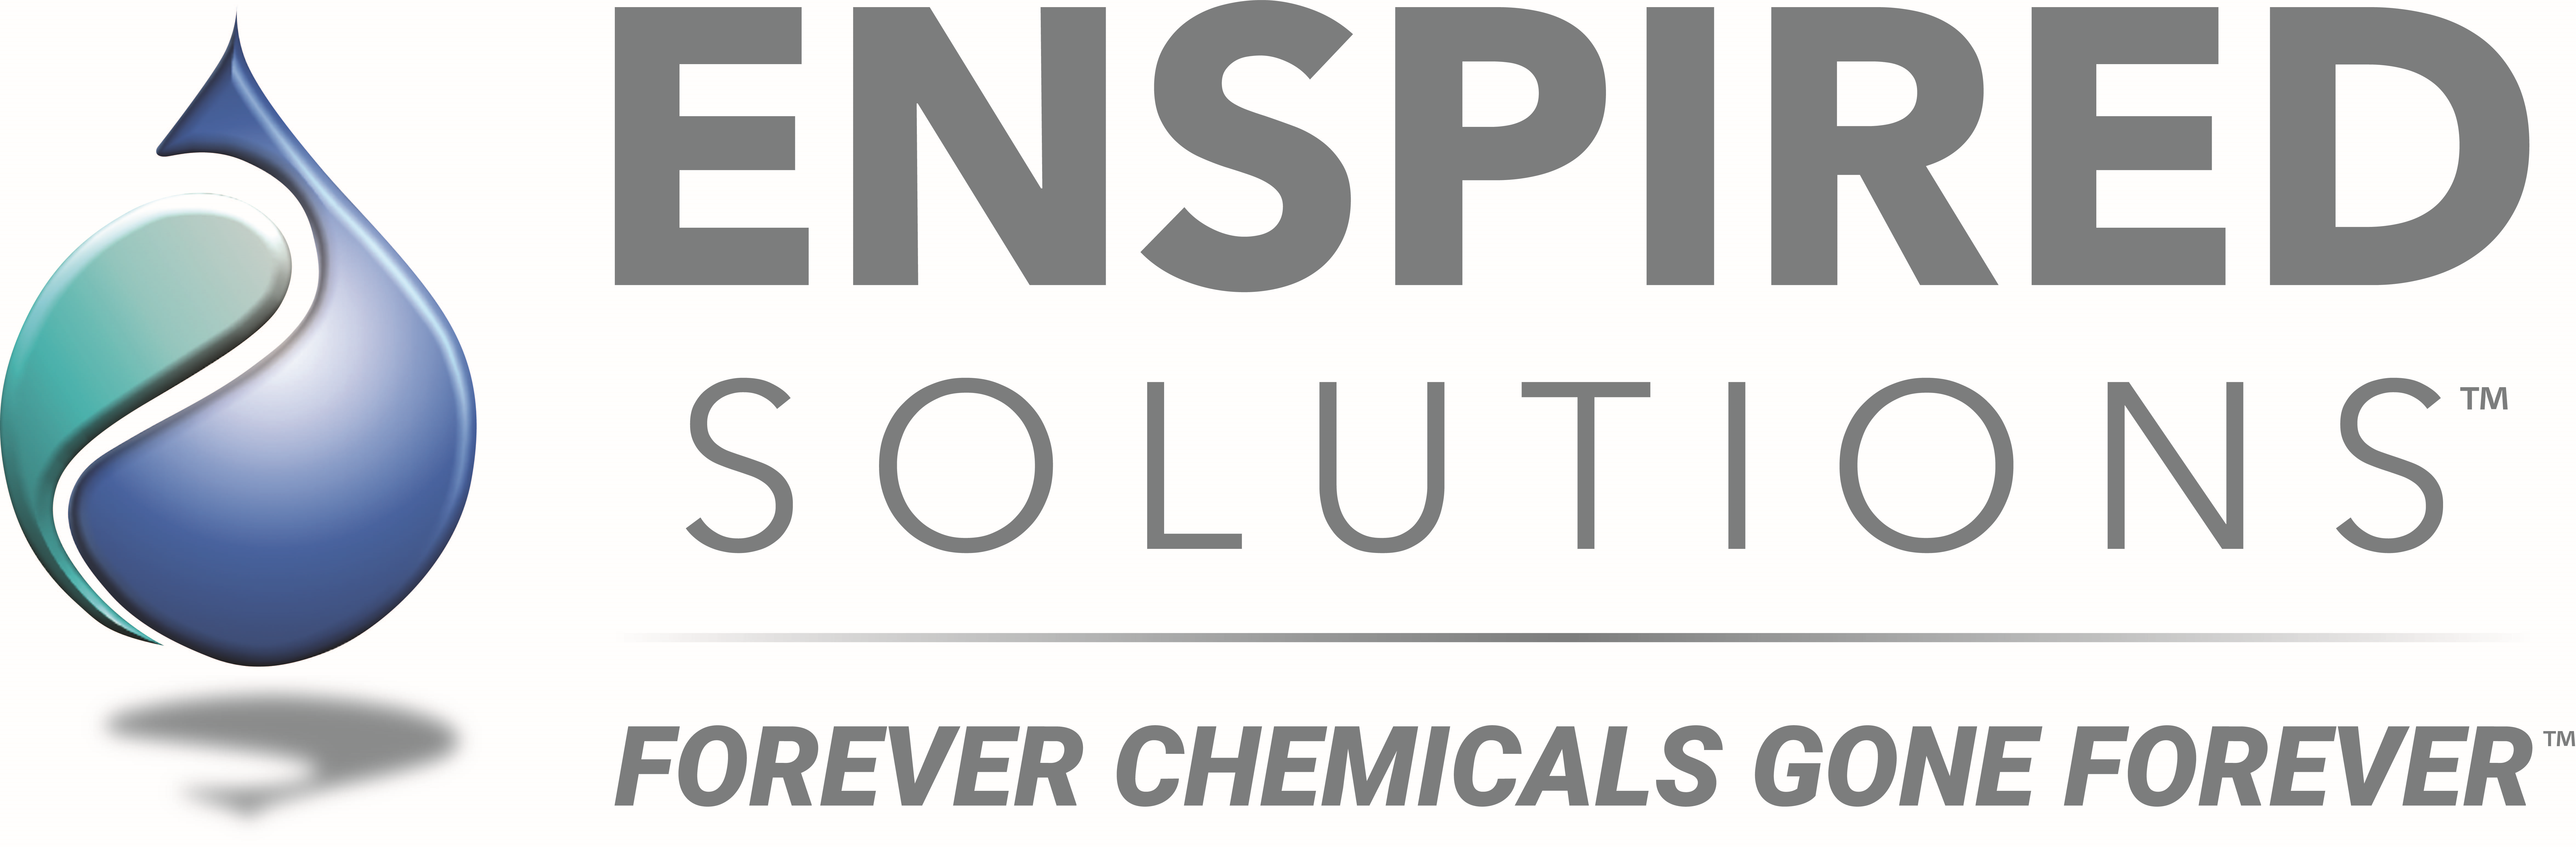 Enspired Solutions LLC